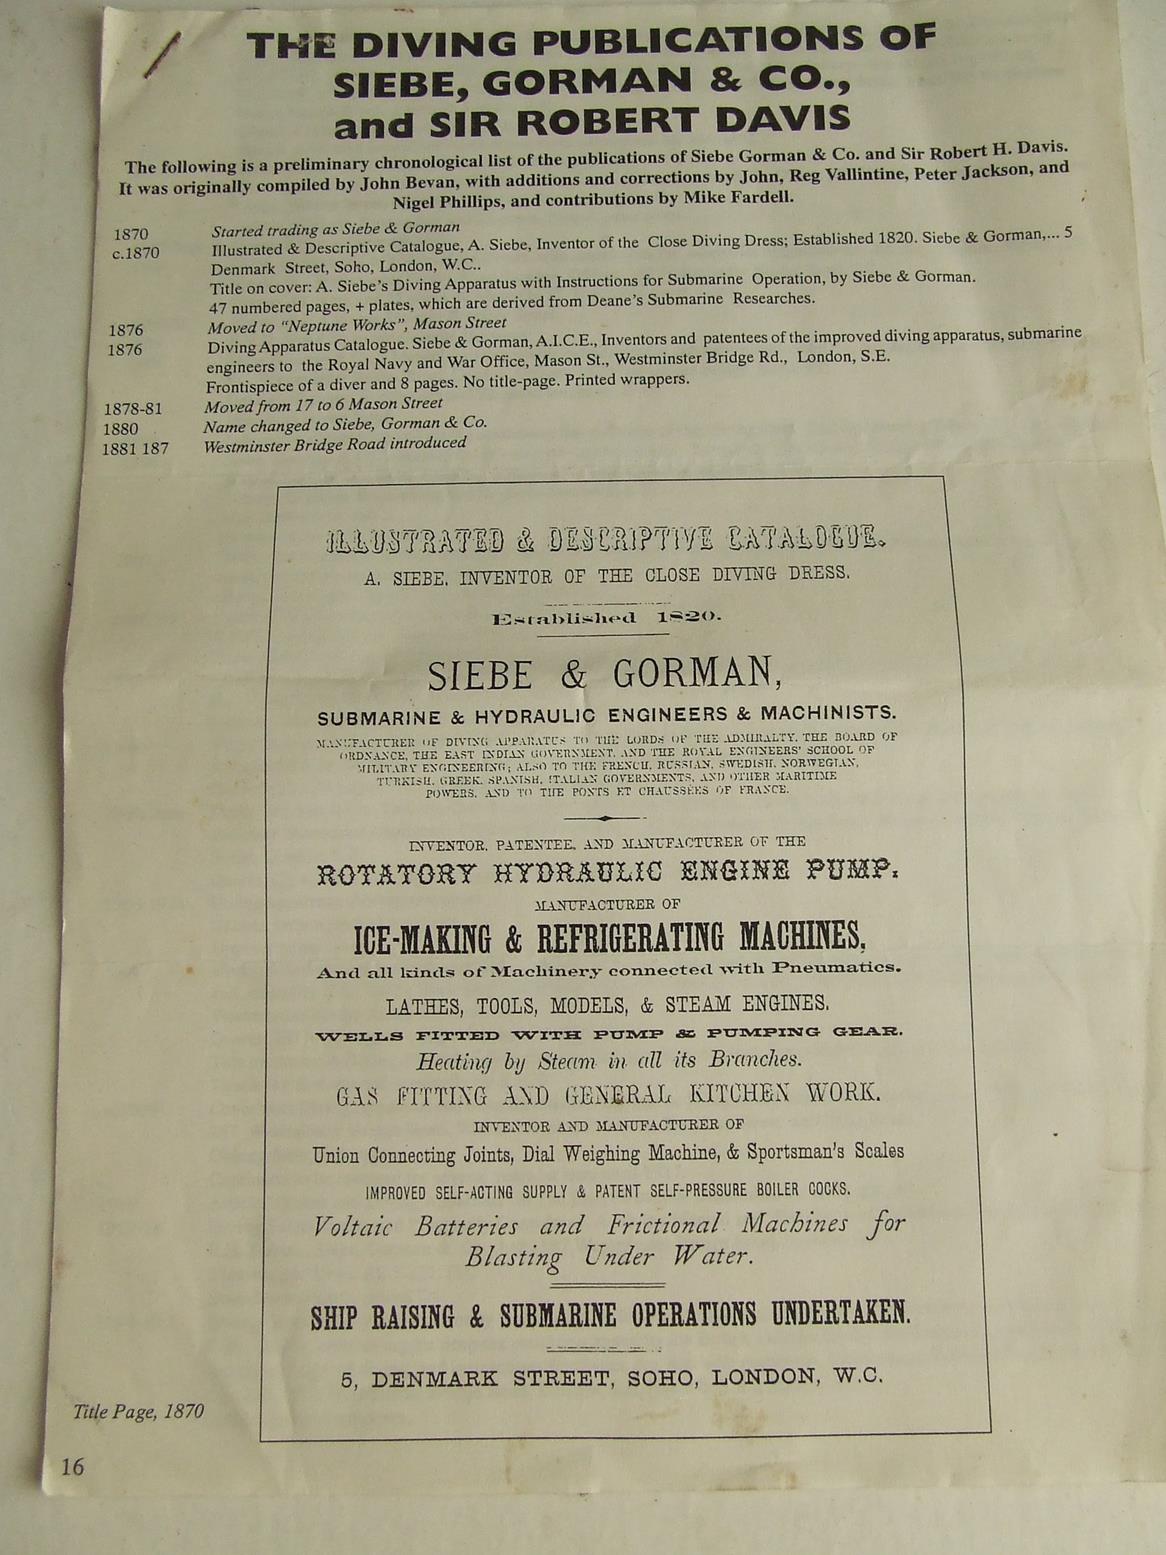 The Diving Publications of Siebe, Gorman & Co., and Sir Robert Davis